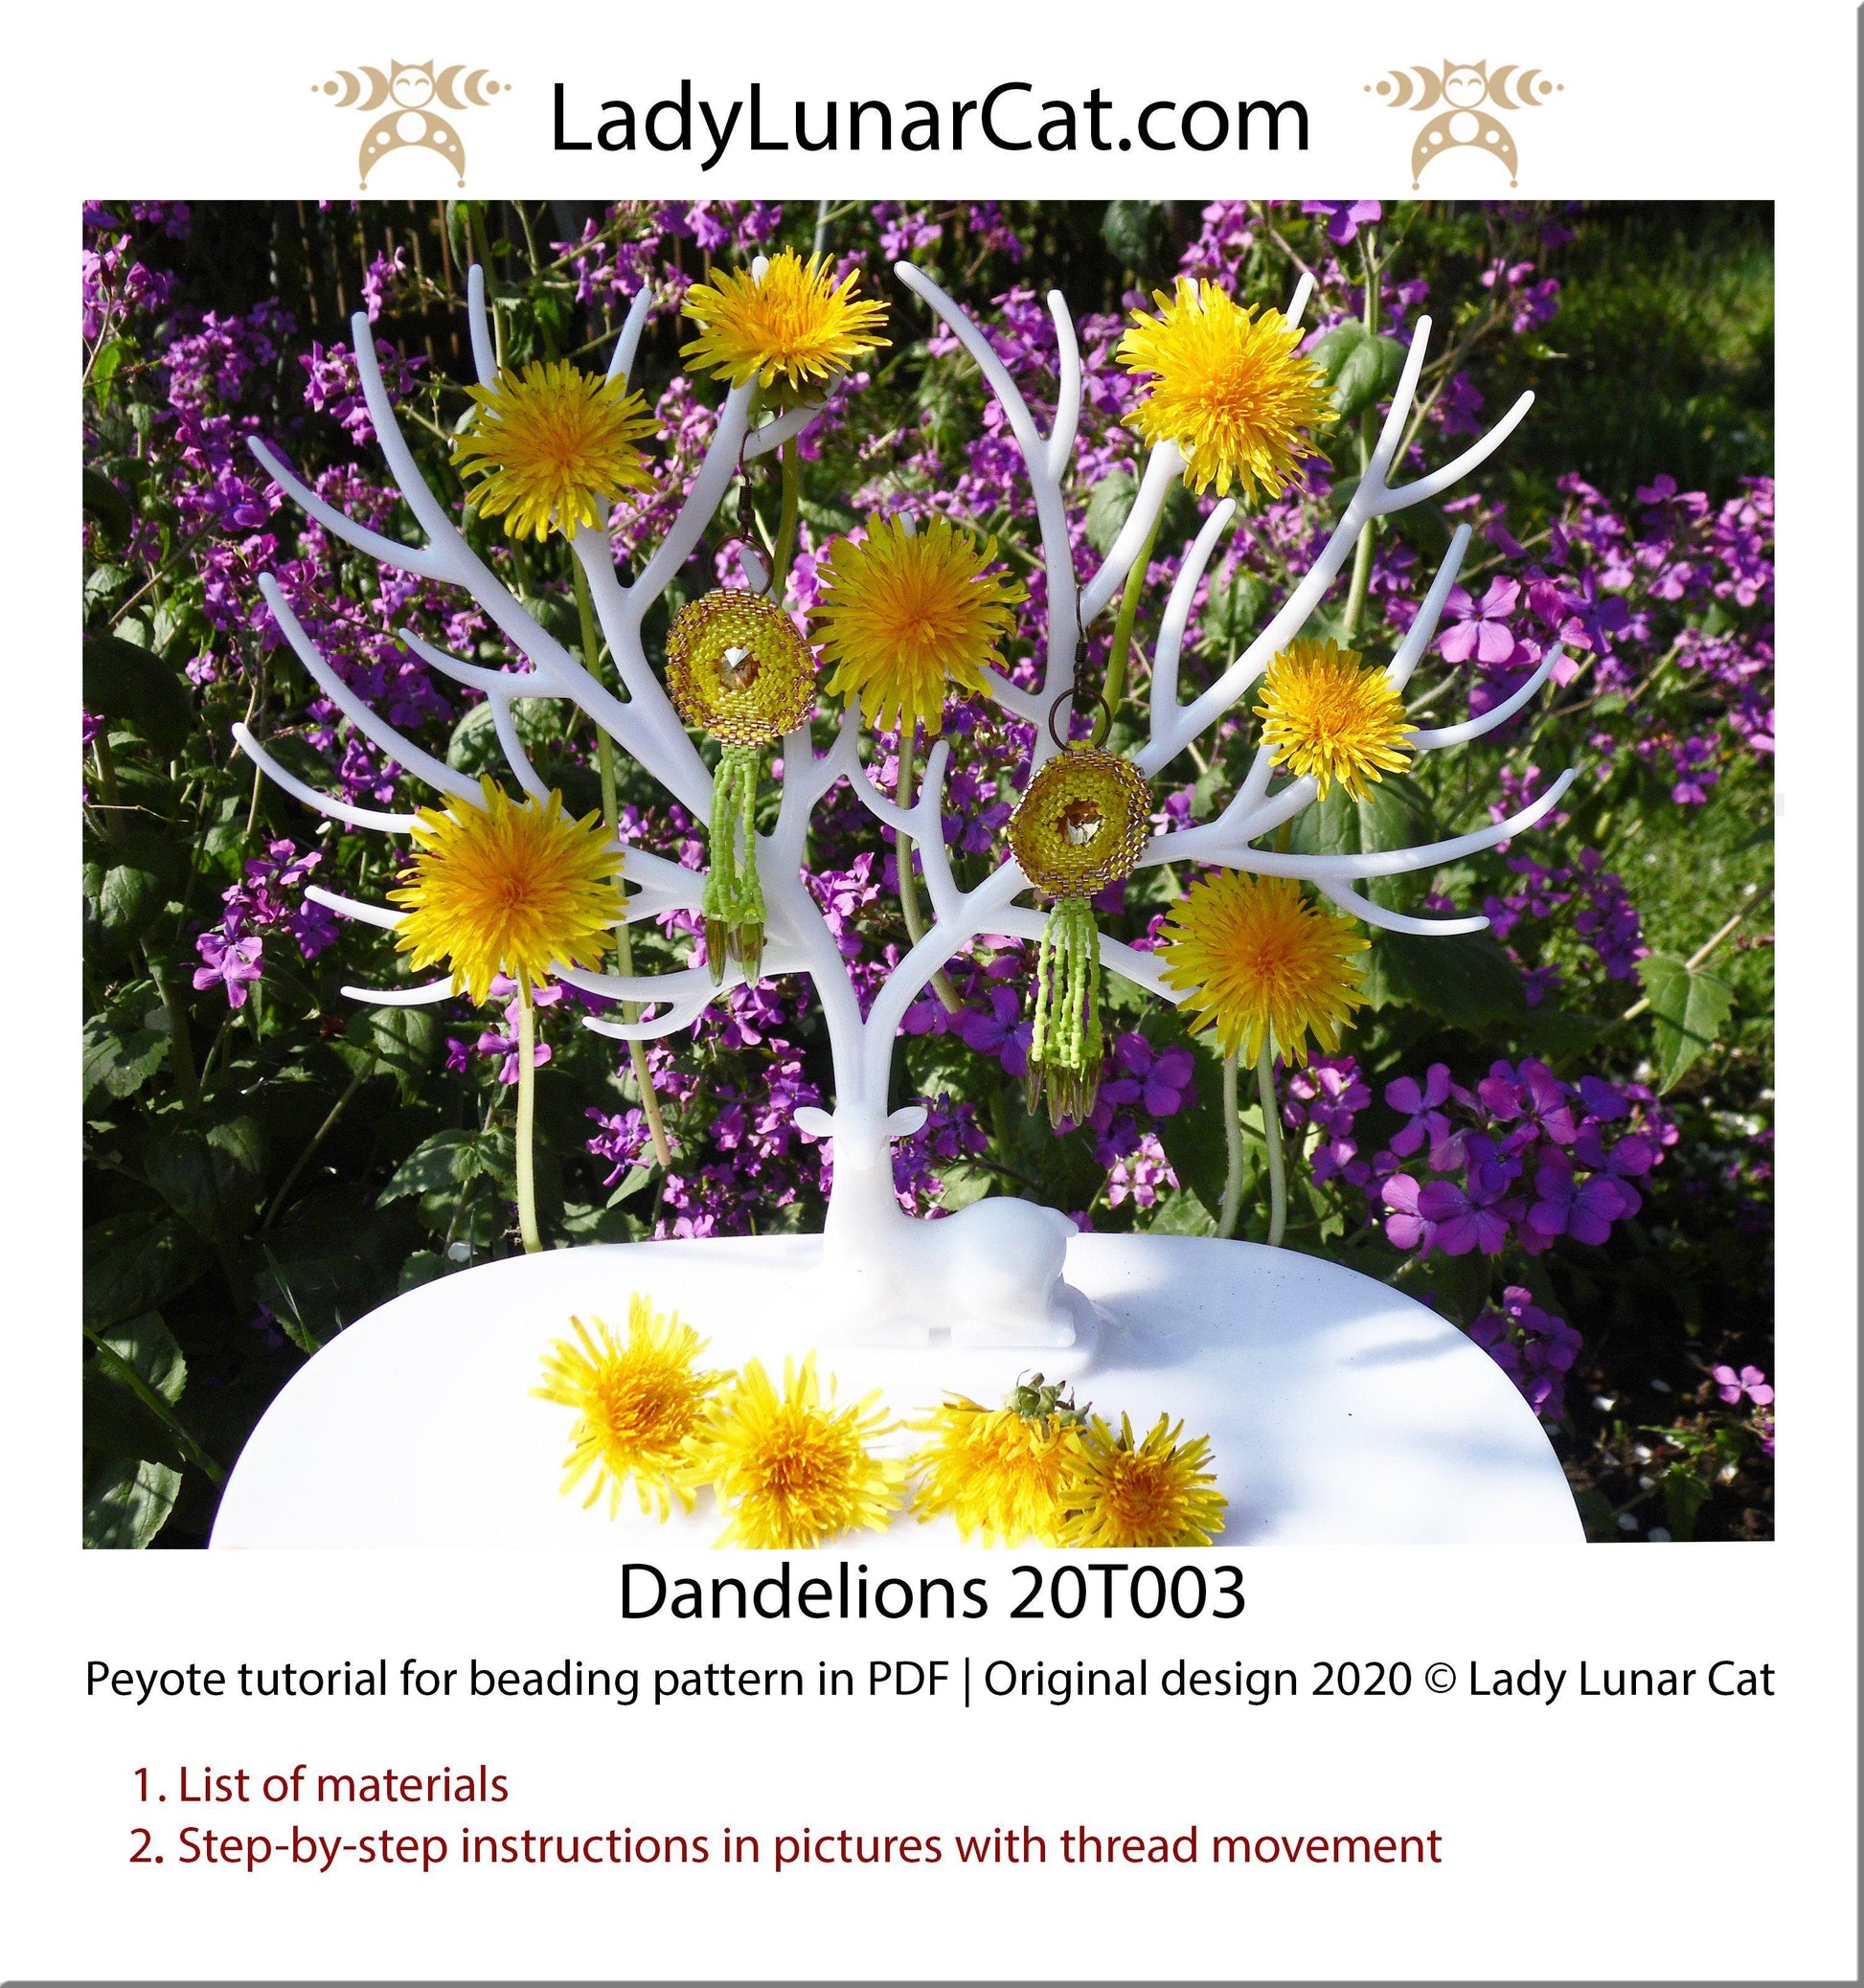 Beading tutorial Peyote hexagon Dandelions 20T003 Step by step instruction LadyLunarCat